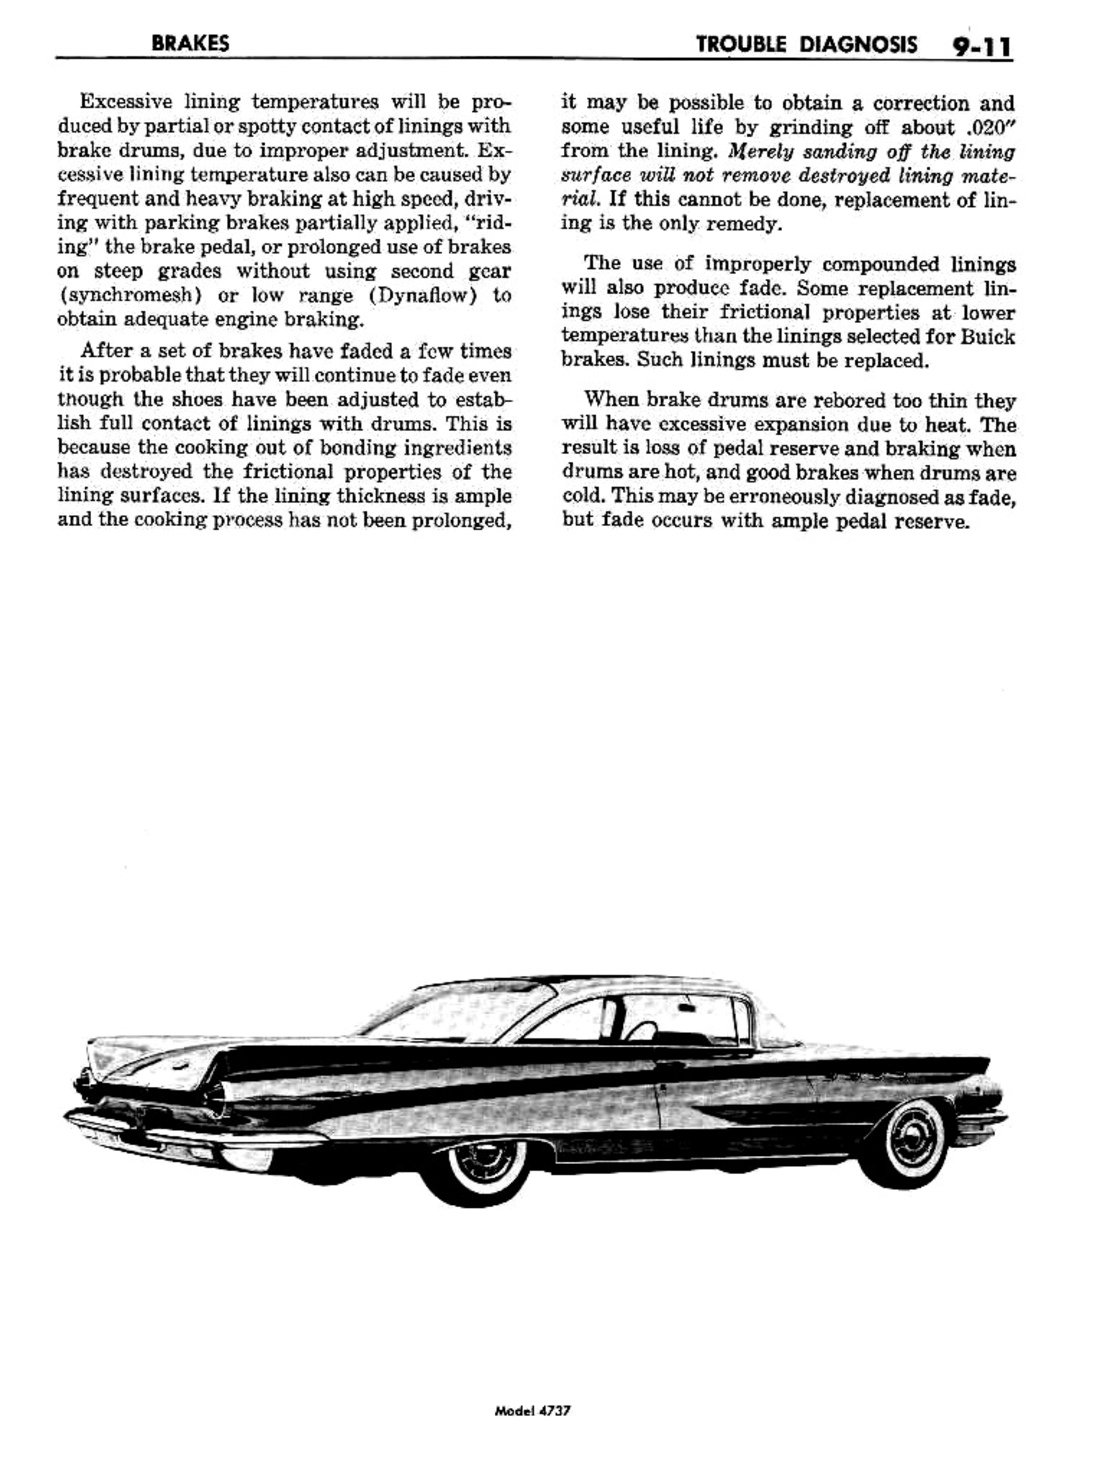 n_10 1960 Buick Shop Manual - Brakes-011-011.jpg